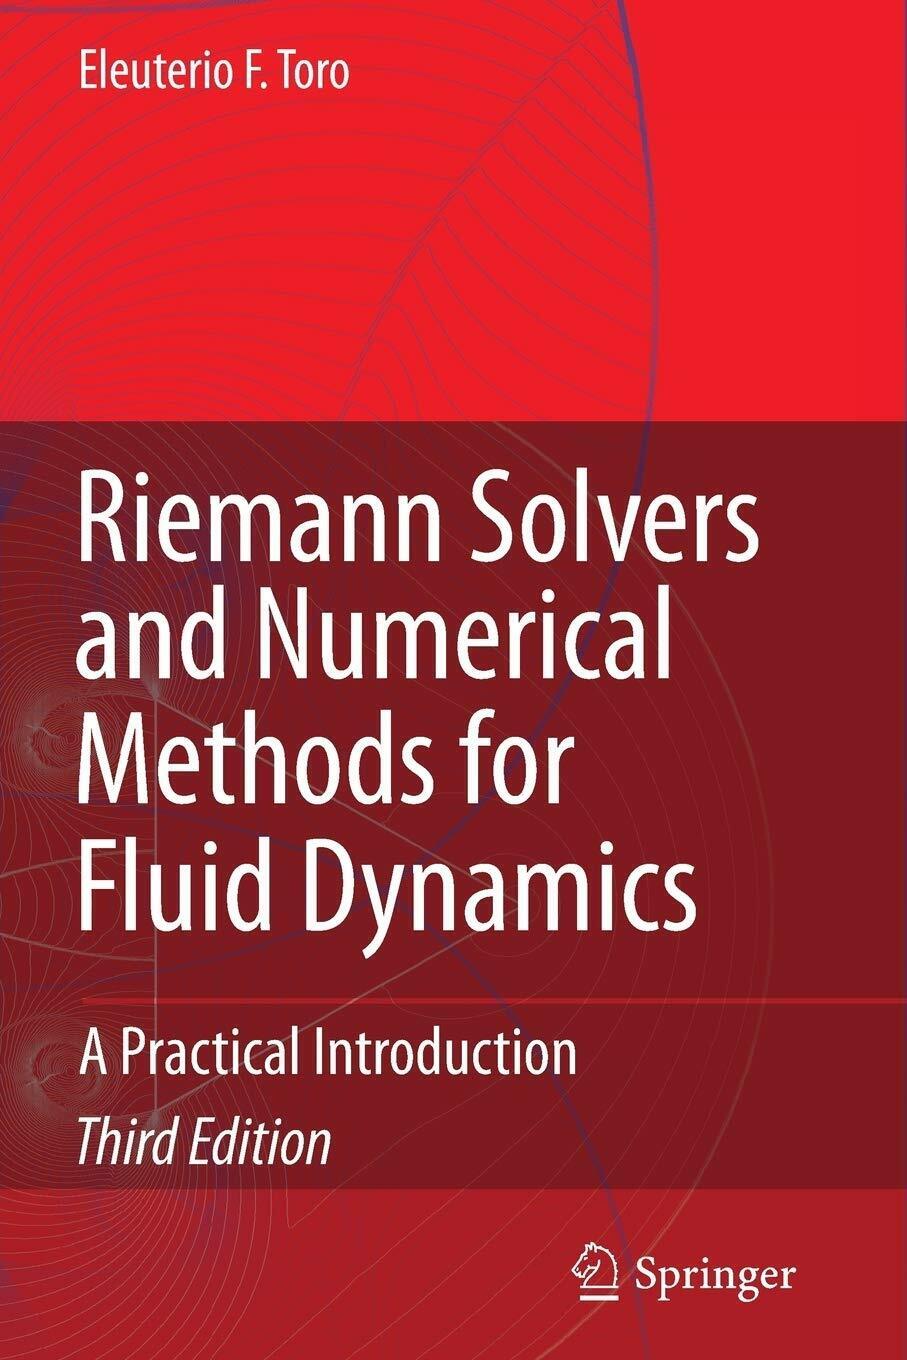 Riemann Solvers and Numerical Methods for Fluid Dynamics - Springer, 2010